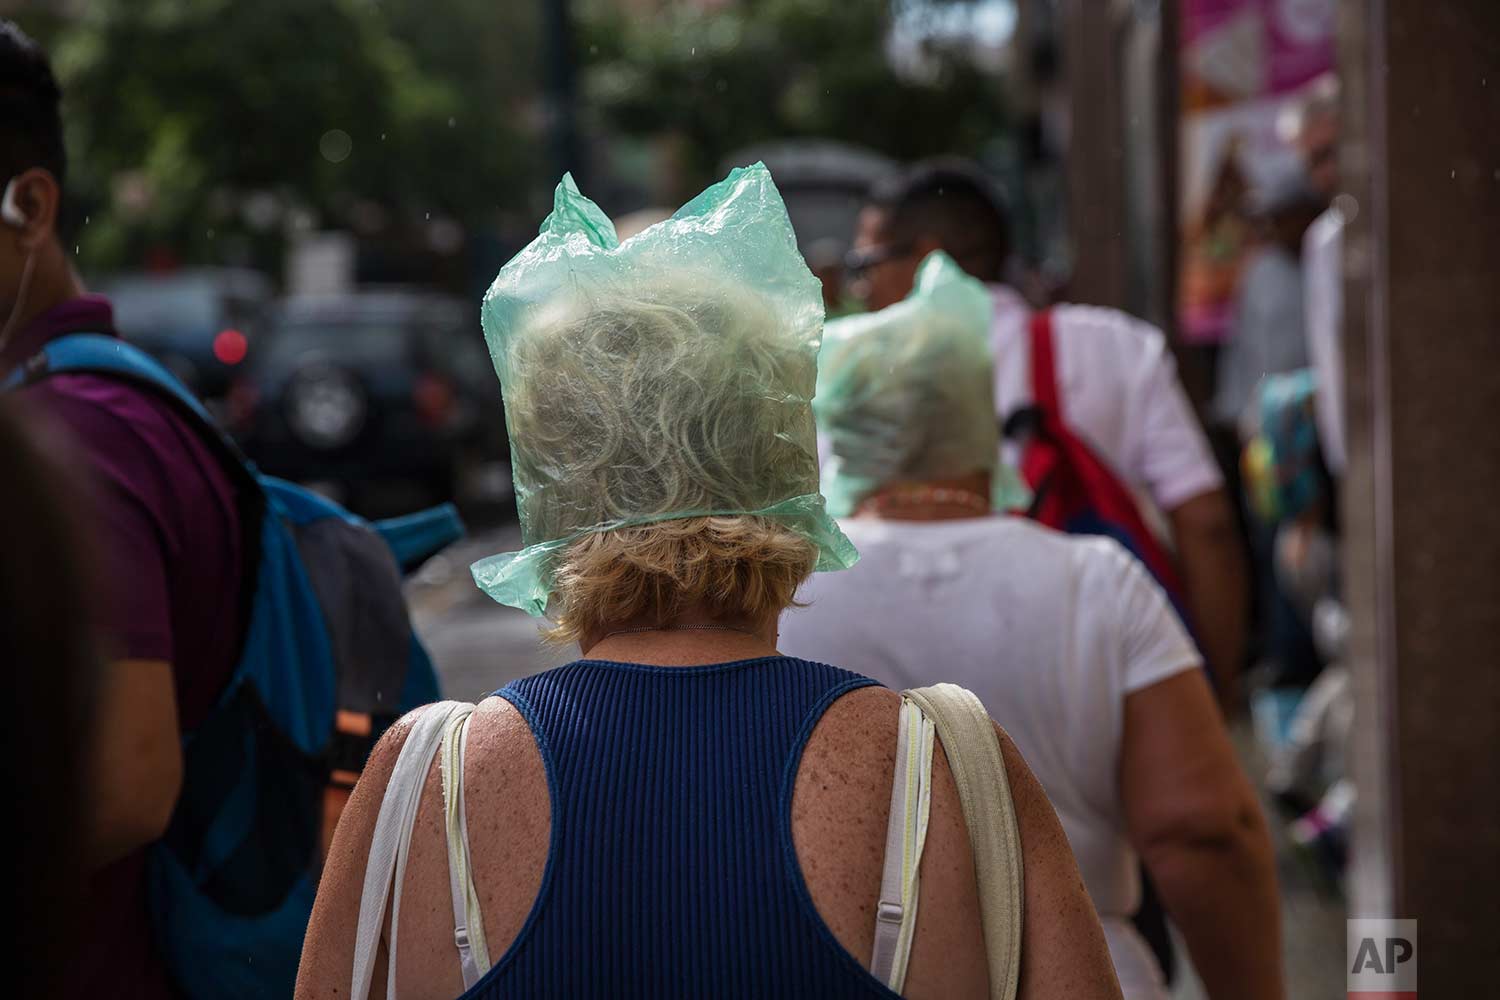  Woman keep their hair dry with plastic bags as it drizzles in downtown Caracas, Venezuela, Tuesday, Oct. 24, 2017. (AP Photo/Rodrigo Abd) 